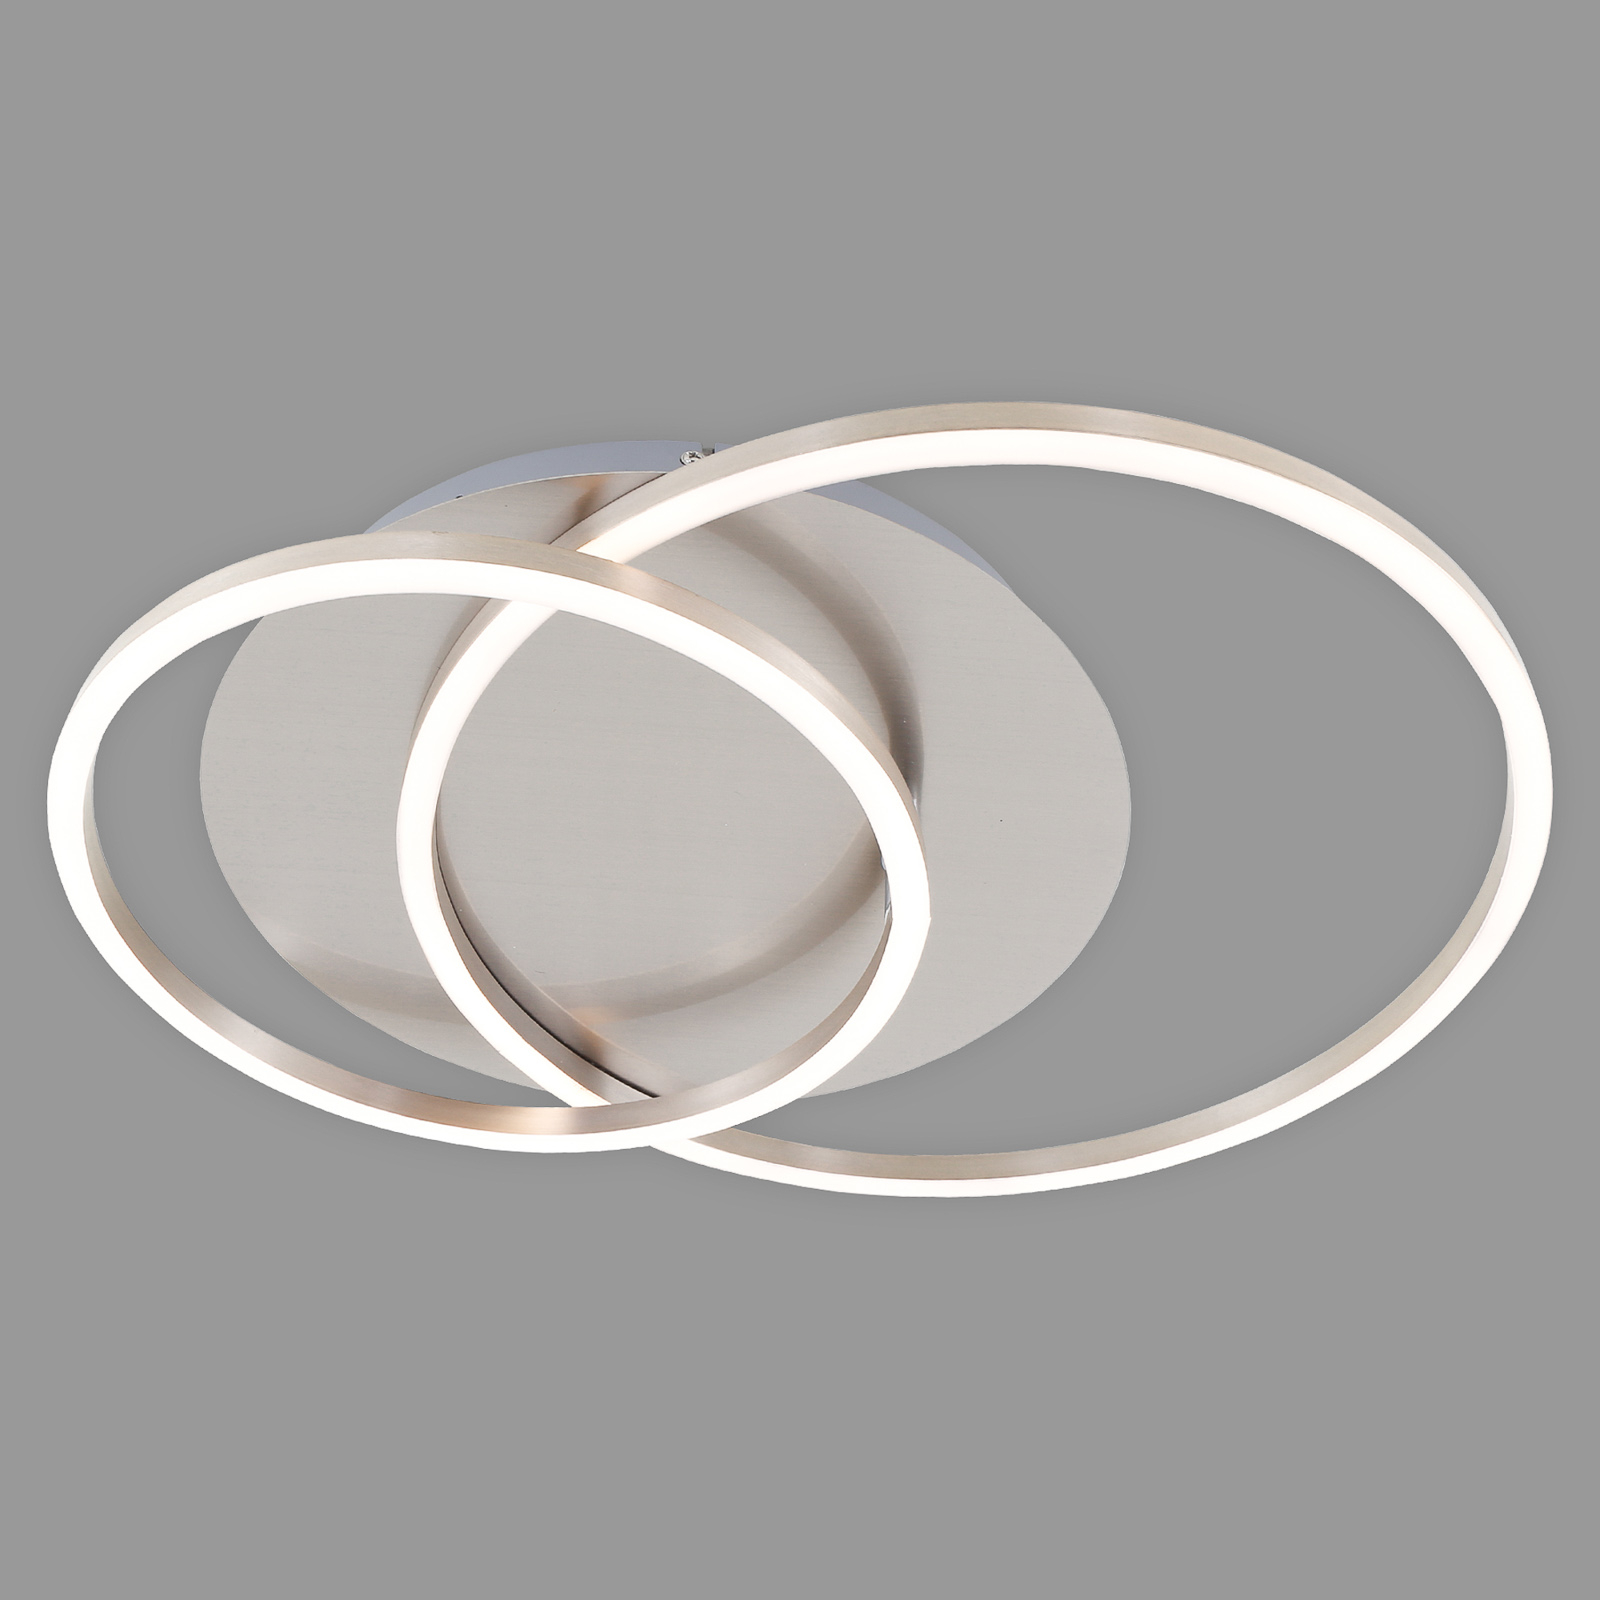 Plafoniera LED Frames due anelli, girevole